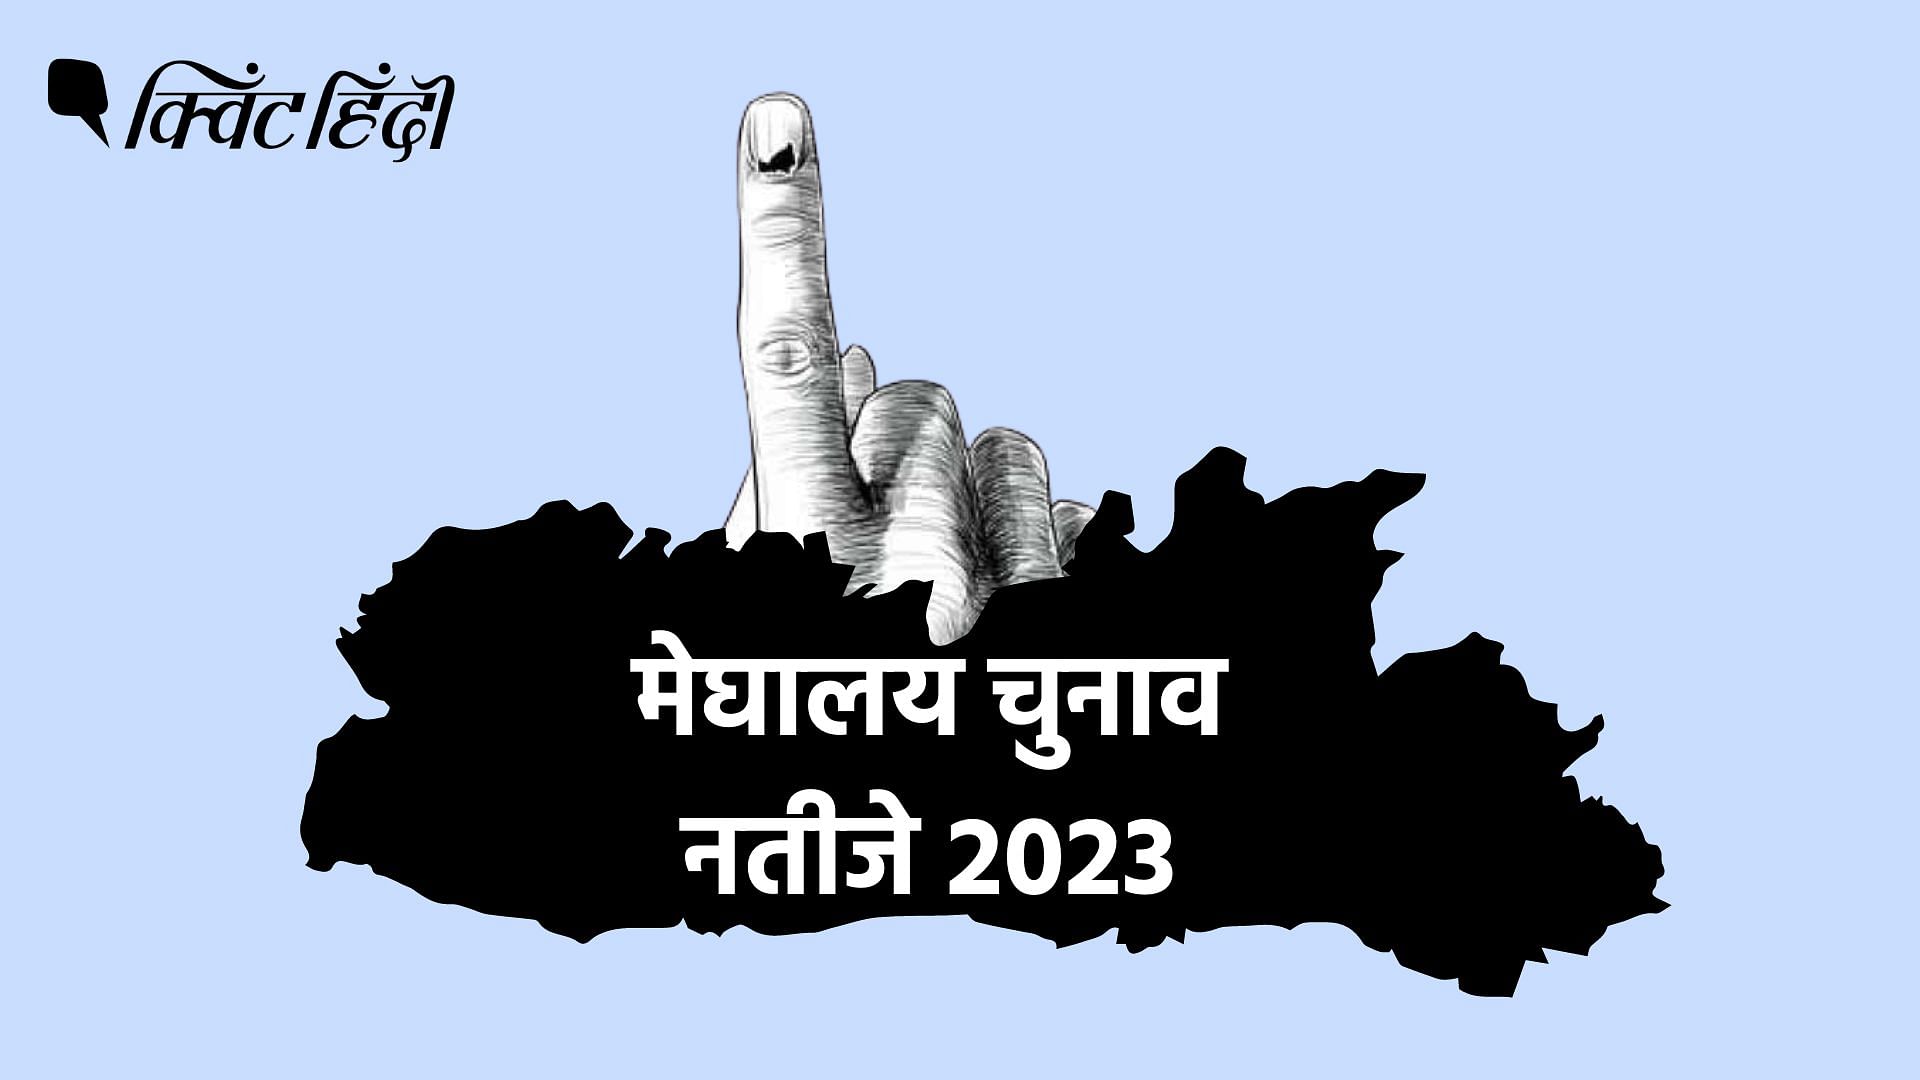 <div class="paragraphs"><p>Meghalaya Election Results 2023 </p></div>